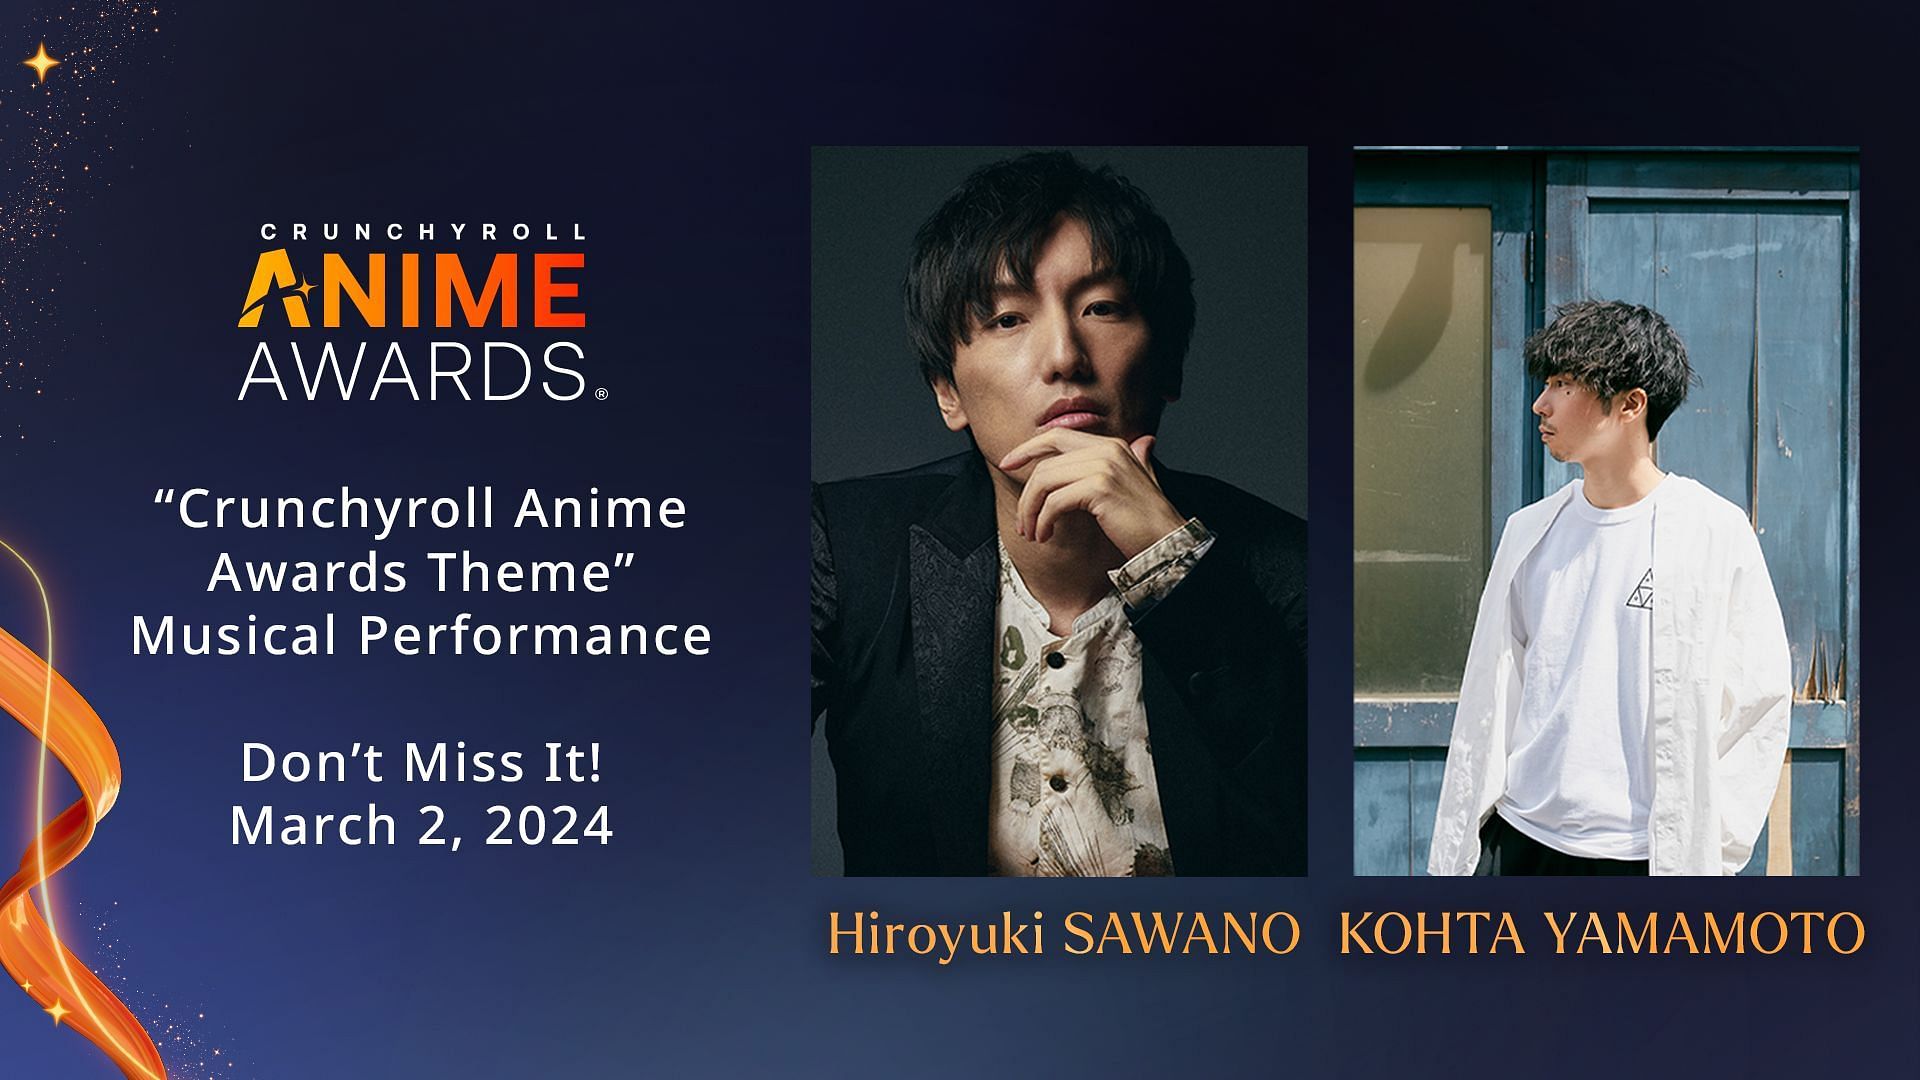 Hiroyuki Sawano and Kohta Yamamoto will produce the opening theme (Image via Crunchyroll)